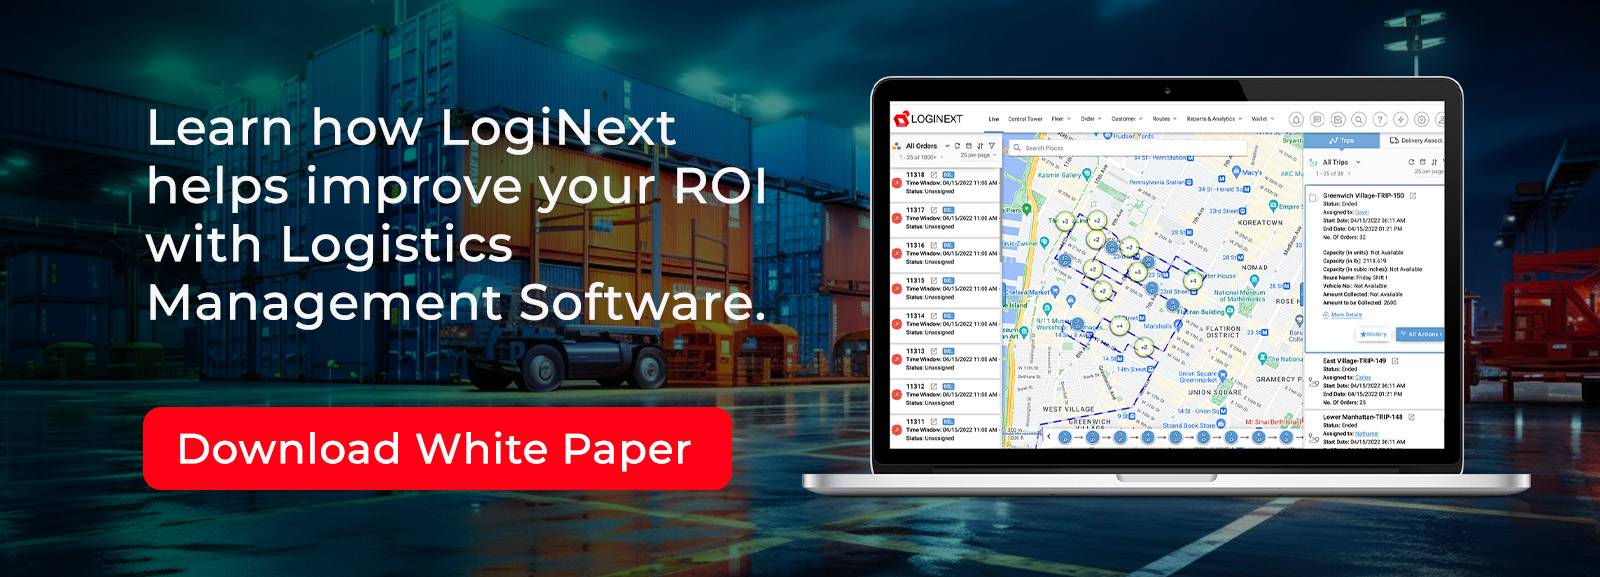 Logistics Management Software Whitepaper Download from LogiNext